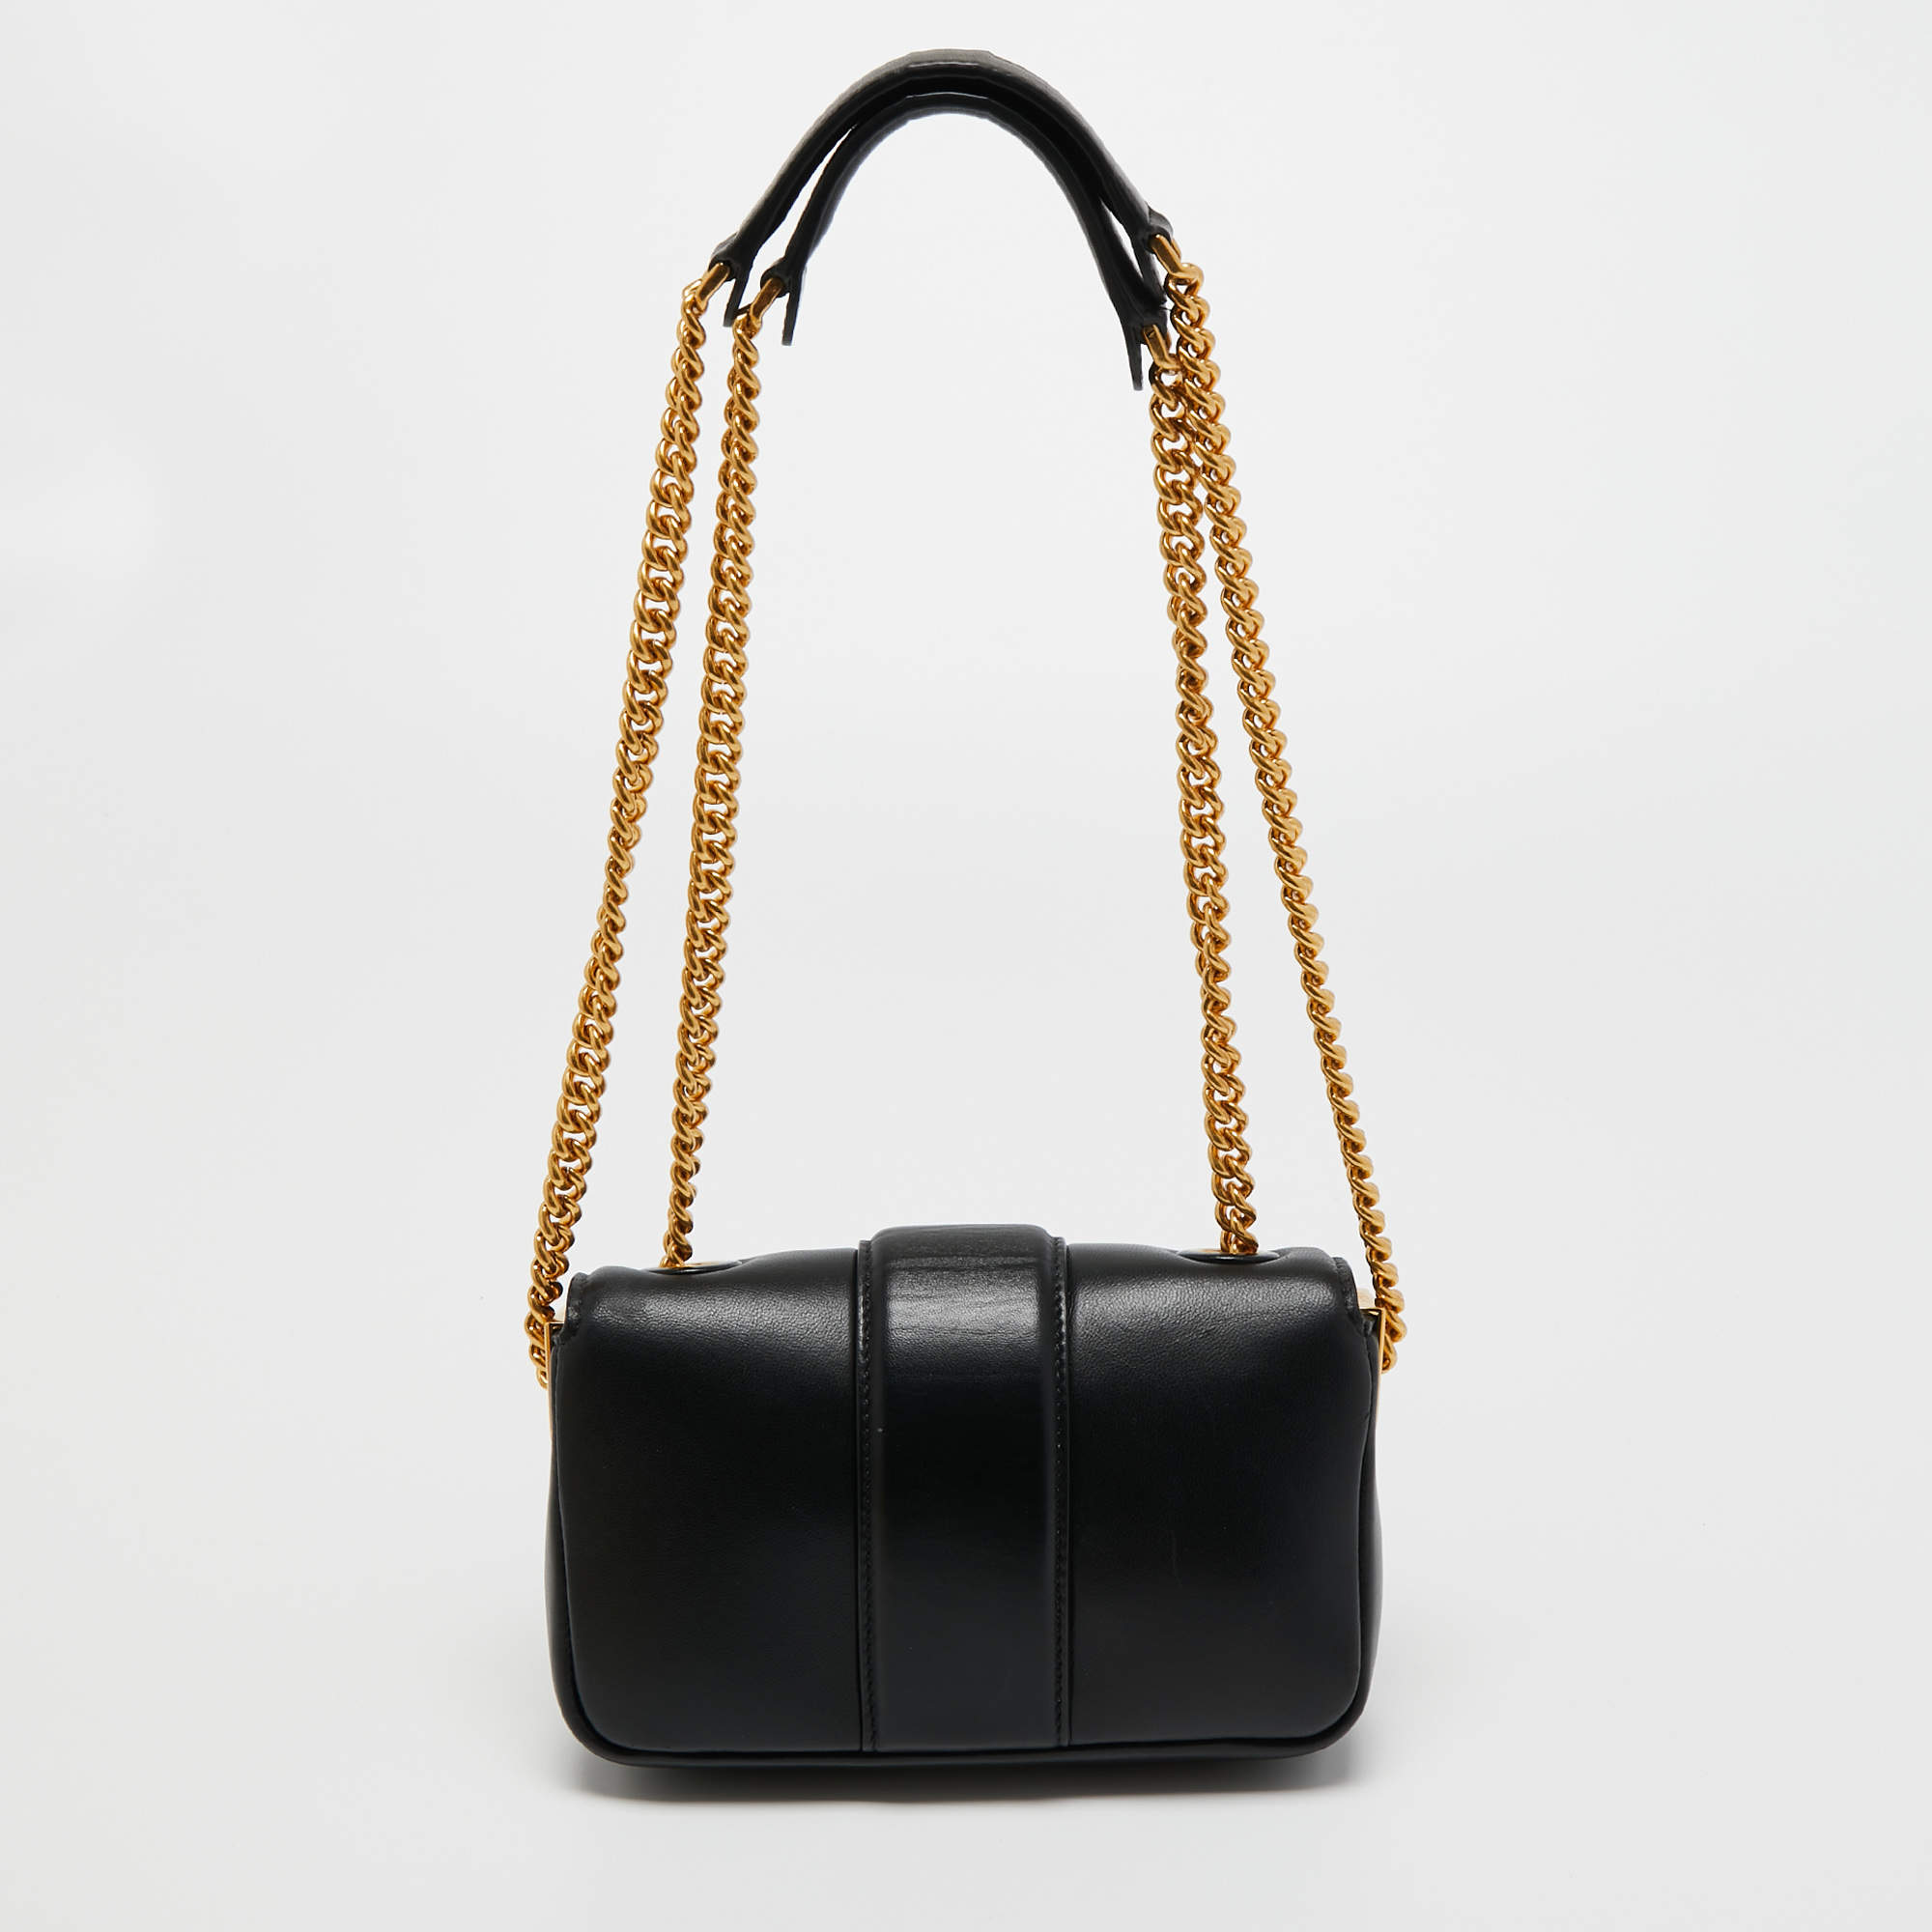 Nano Baguette Chain - Black nappa leather mini bag